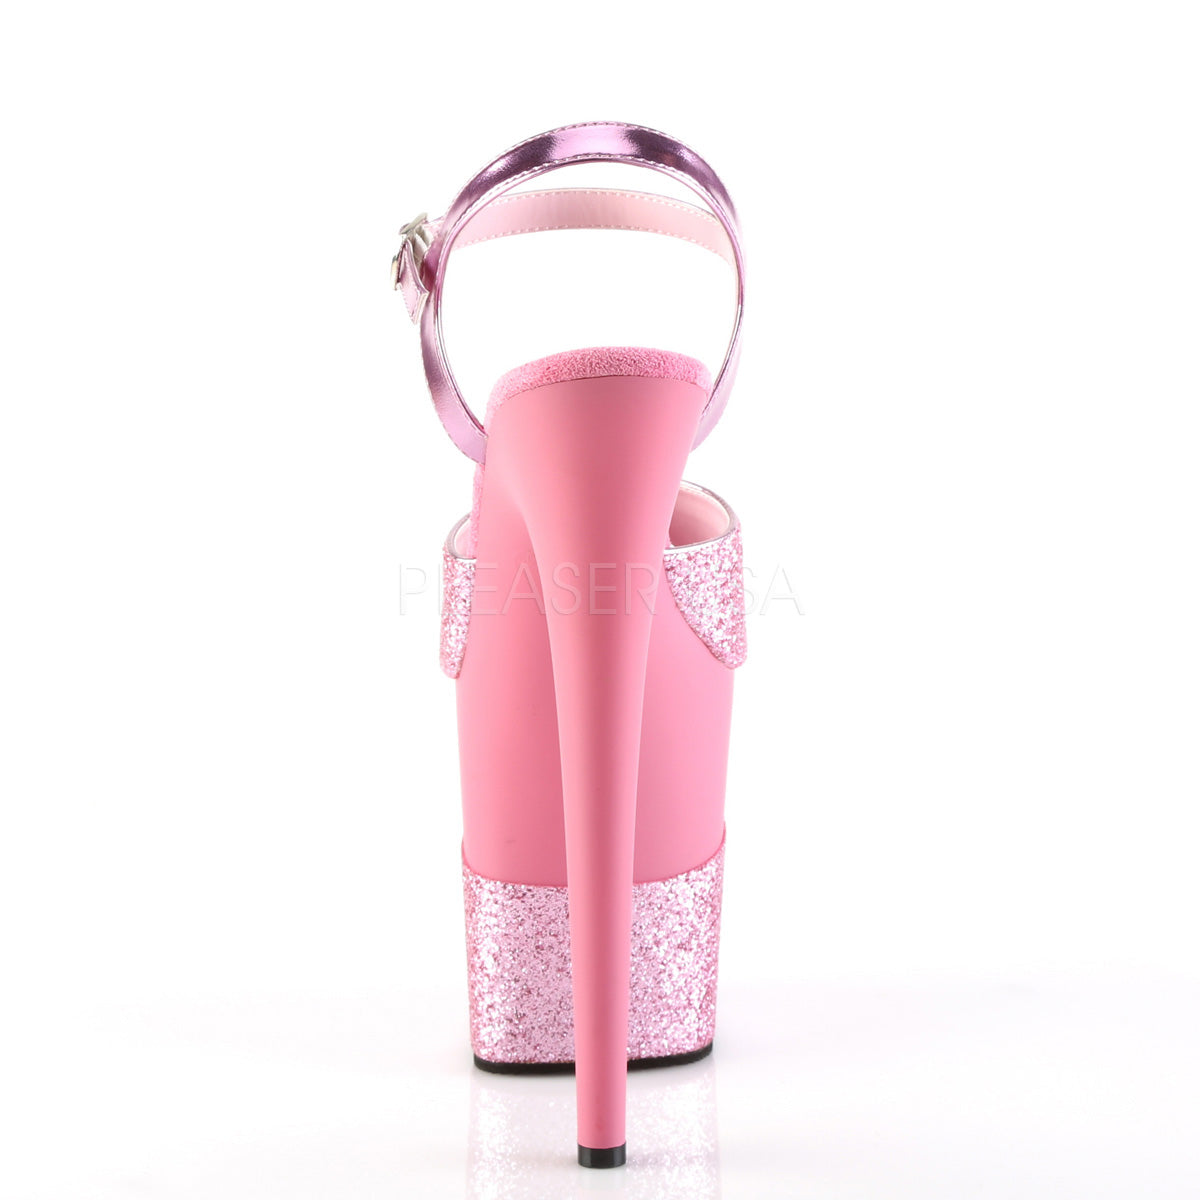 8 Inch Pink Platform Heels ( Flamingo 809-2G )